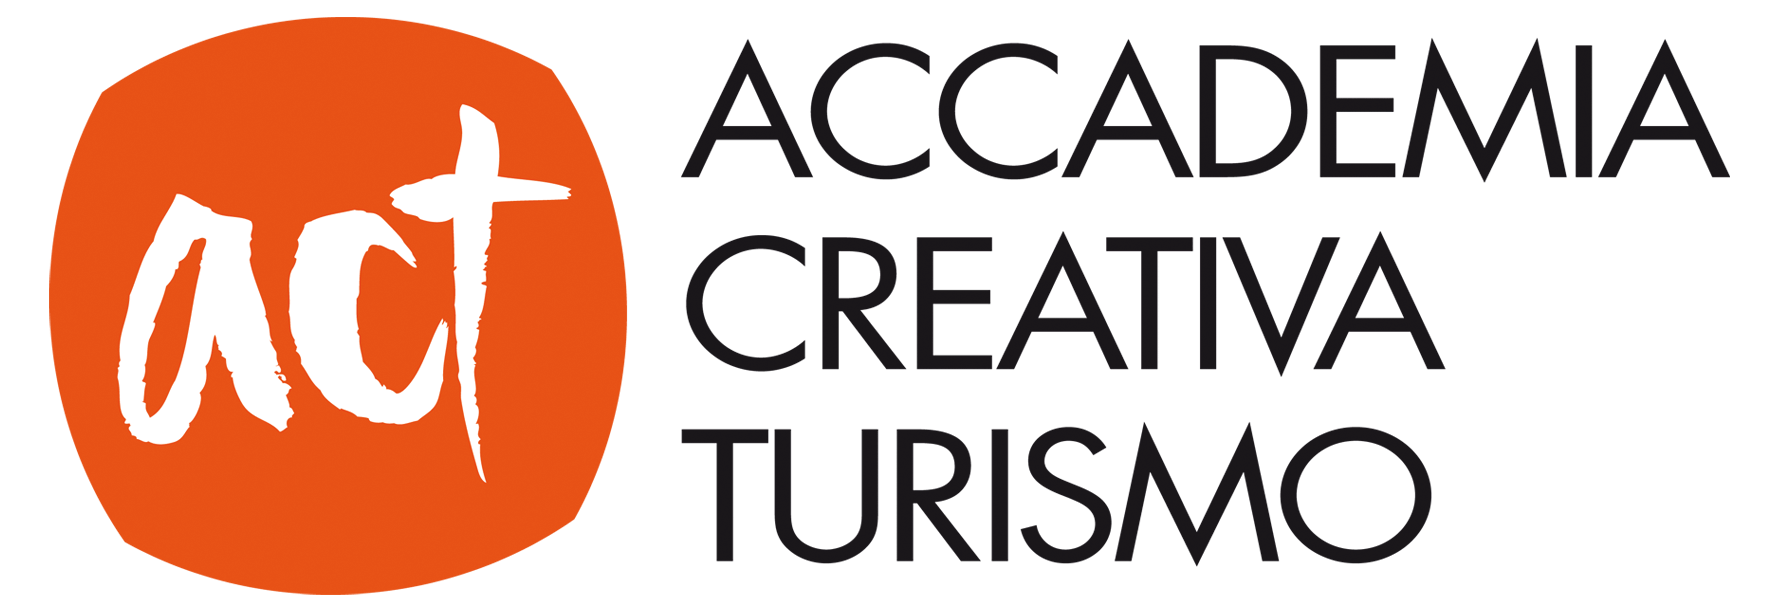 Accademia Creativa Turismo